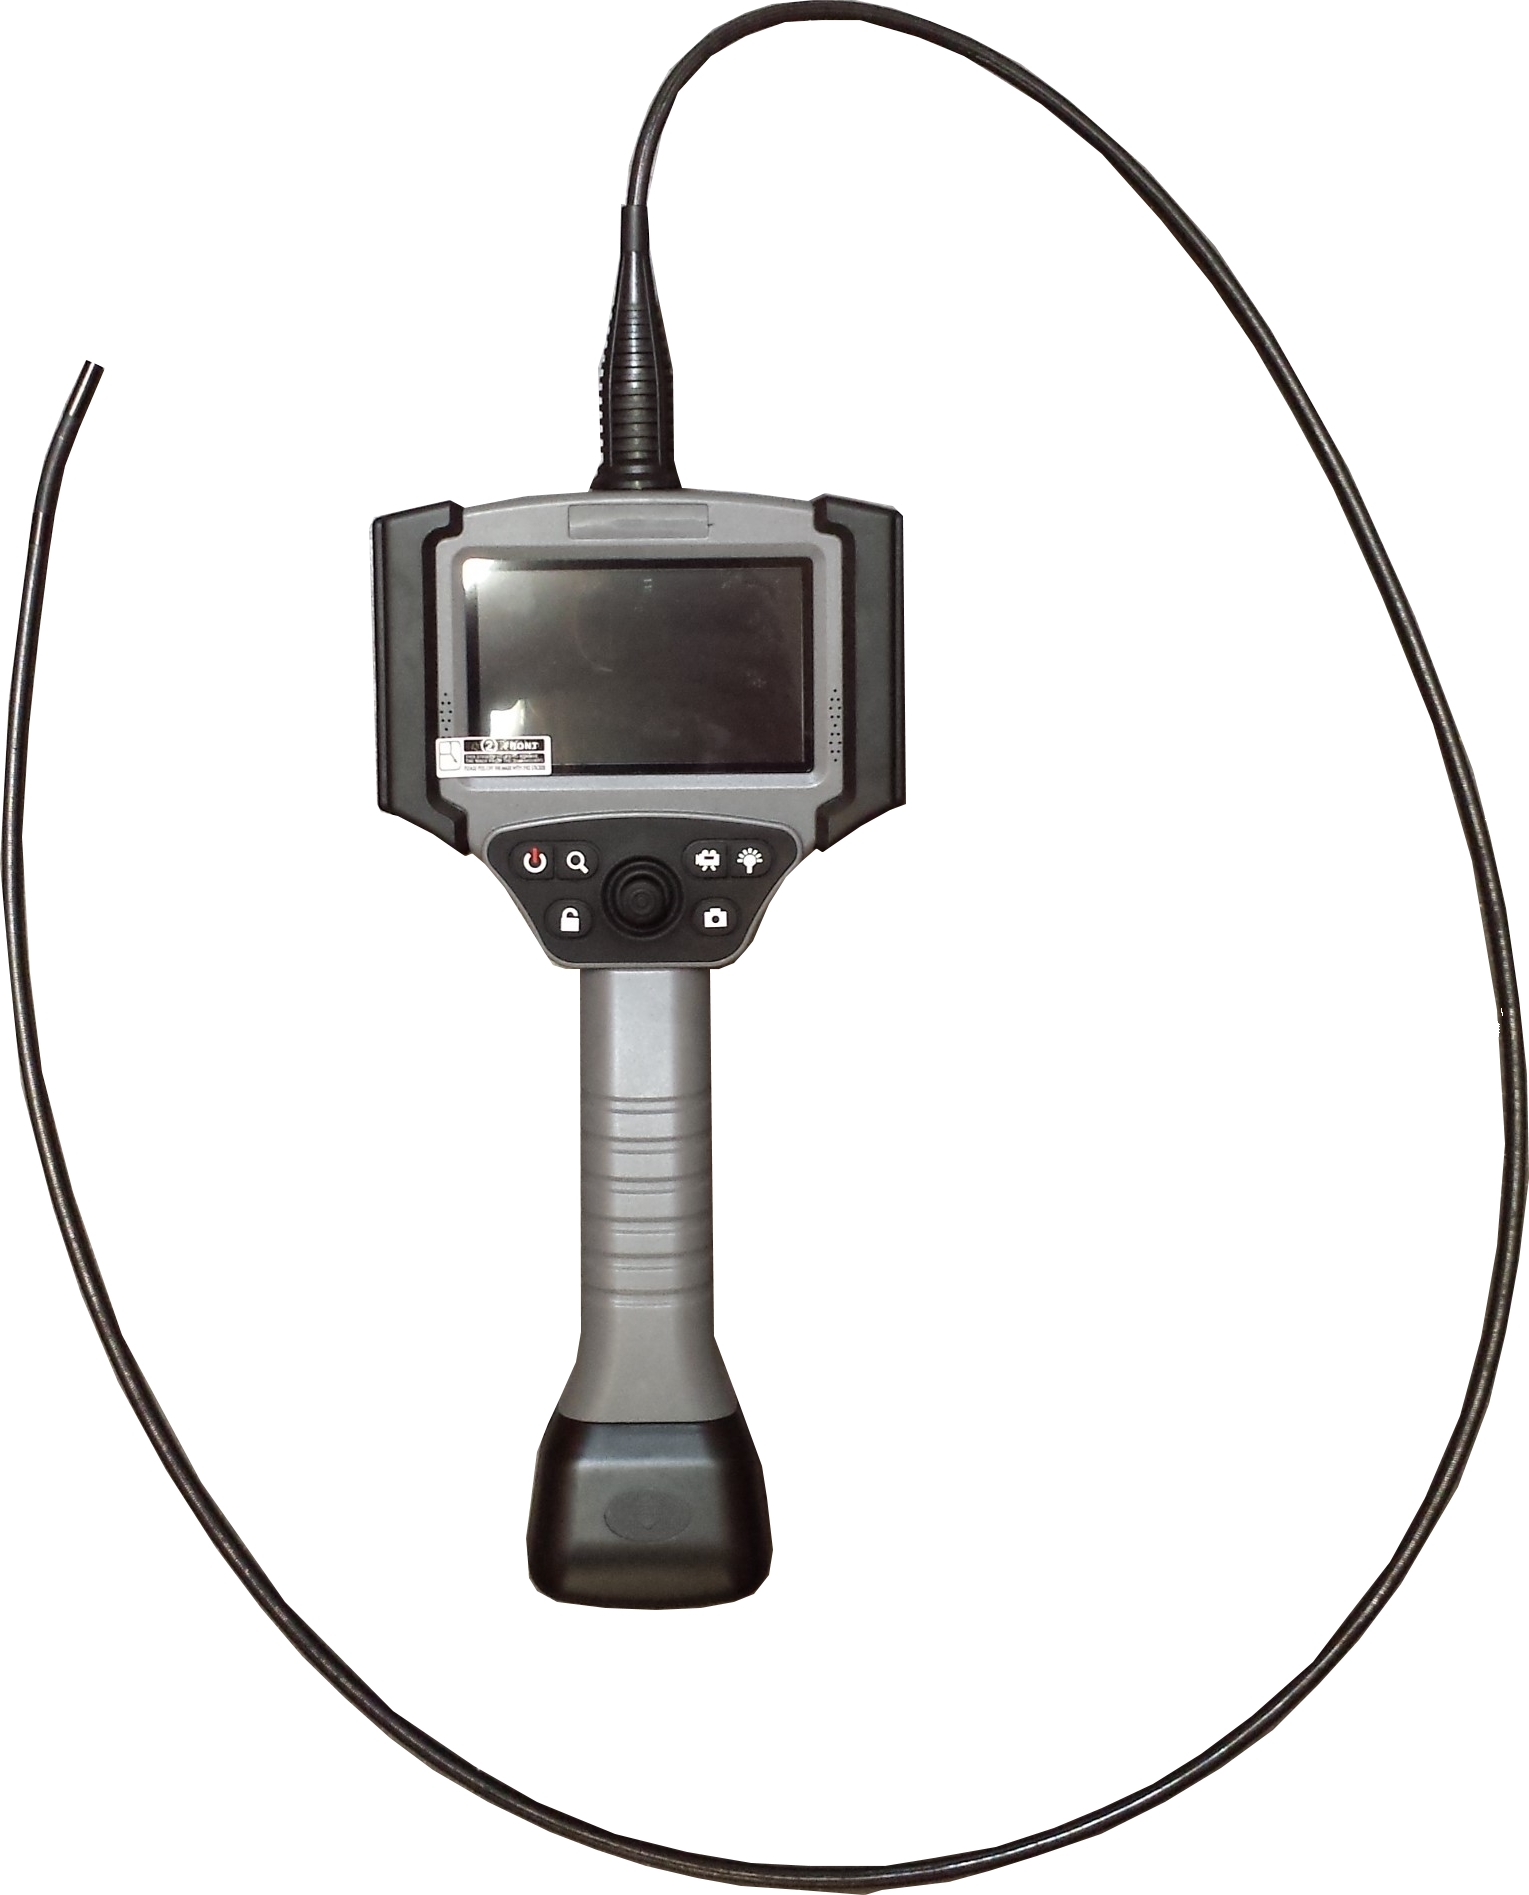 Videoscope a bequillage motorise - xp endoflex m4_0